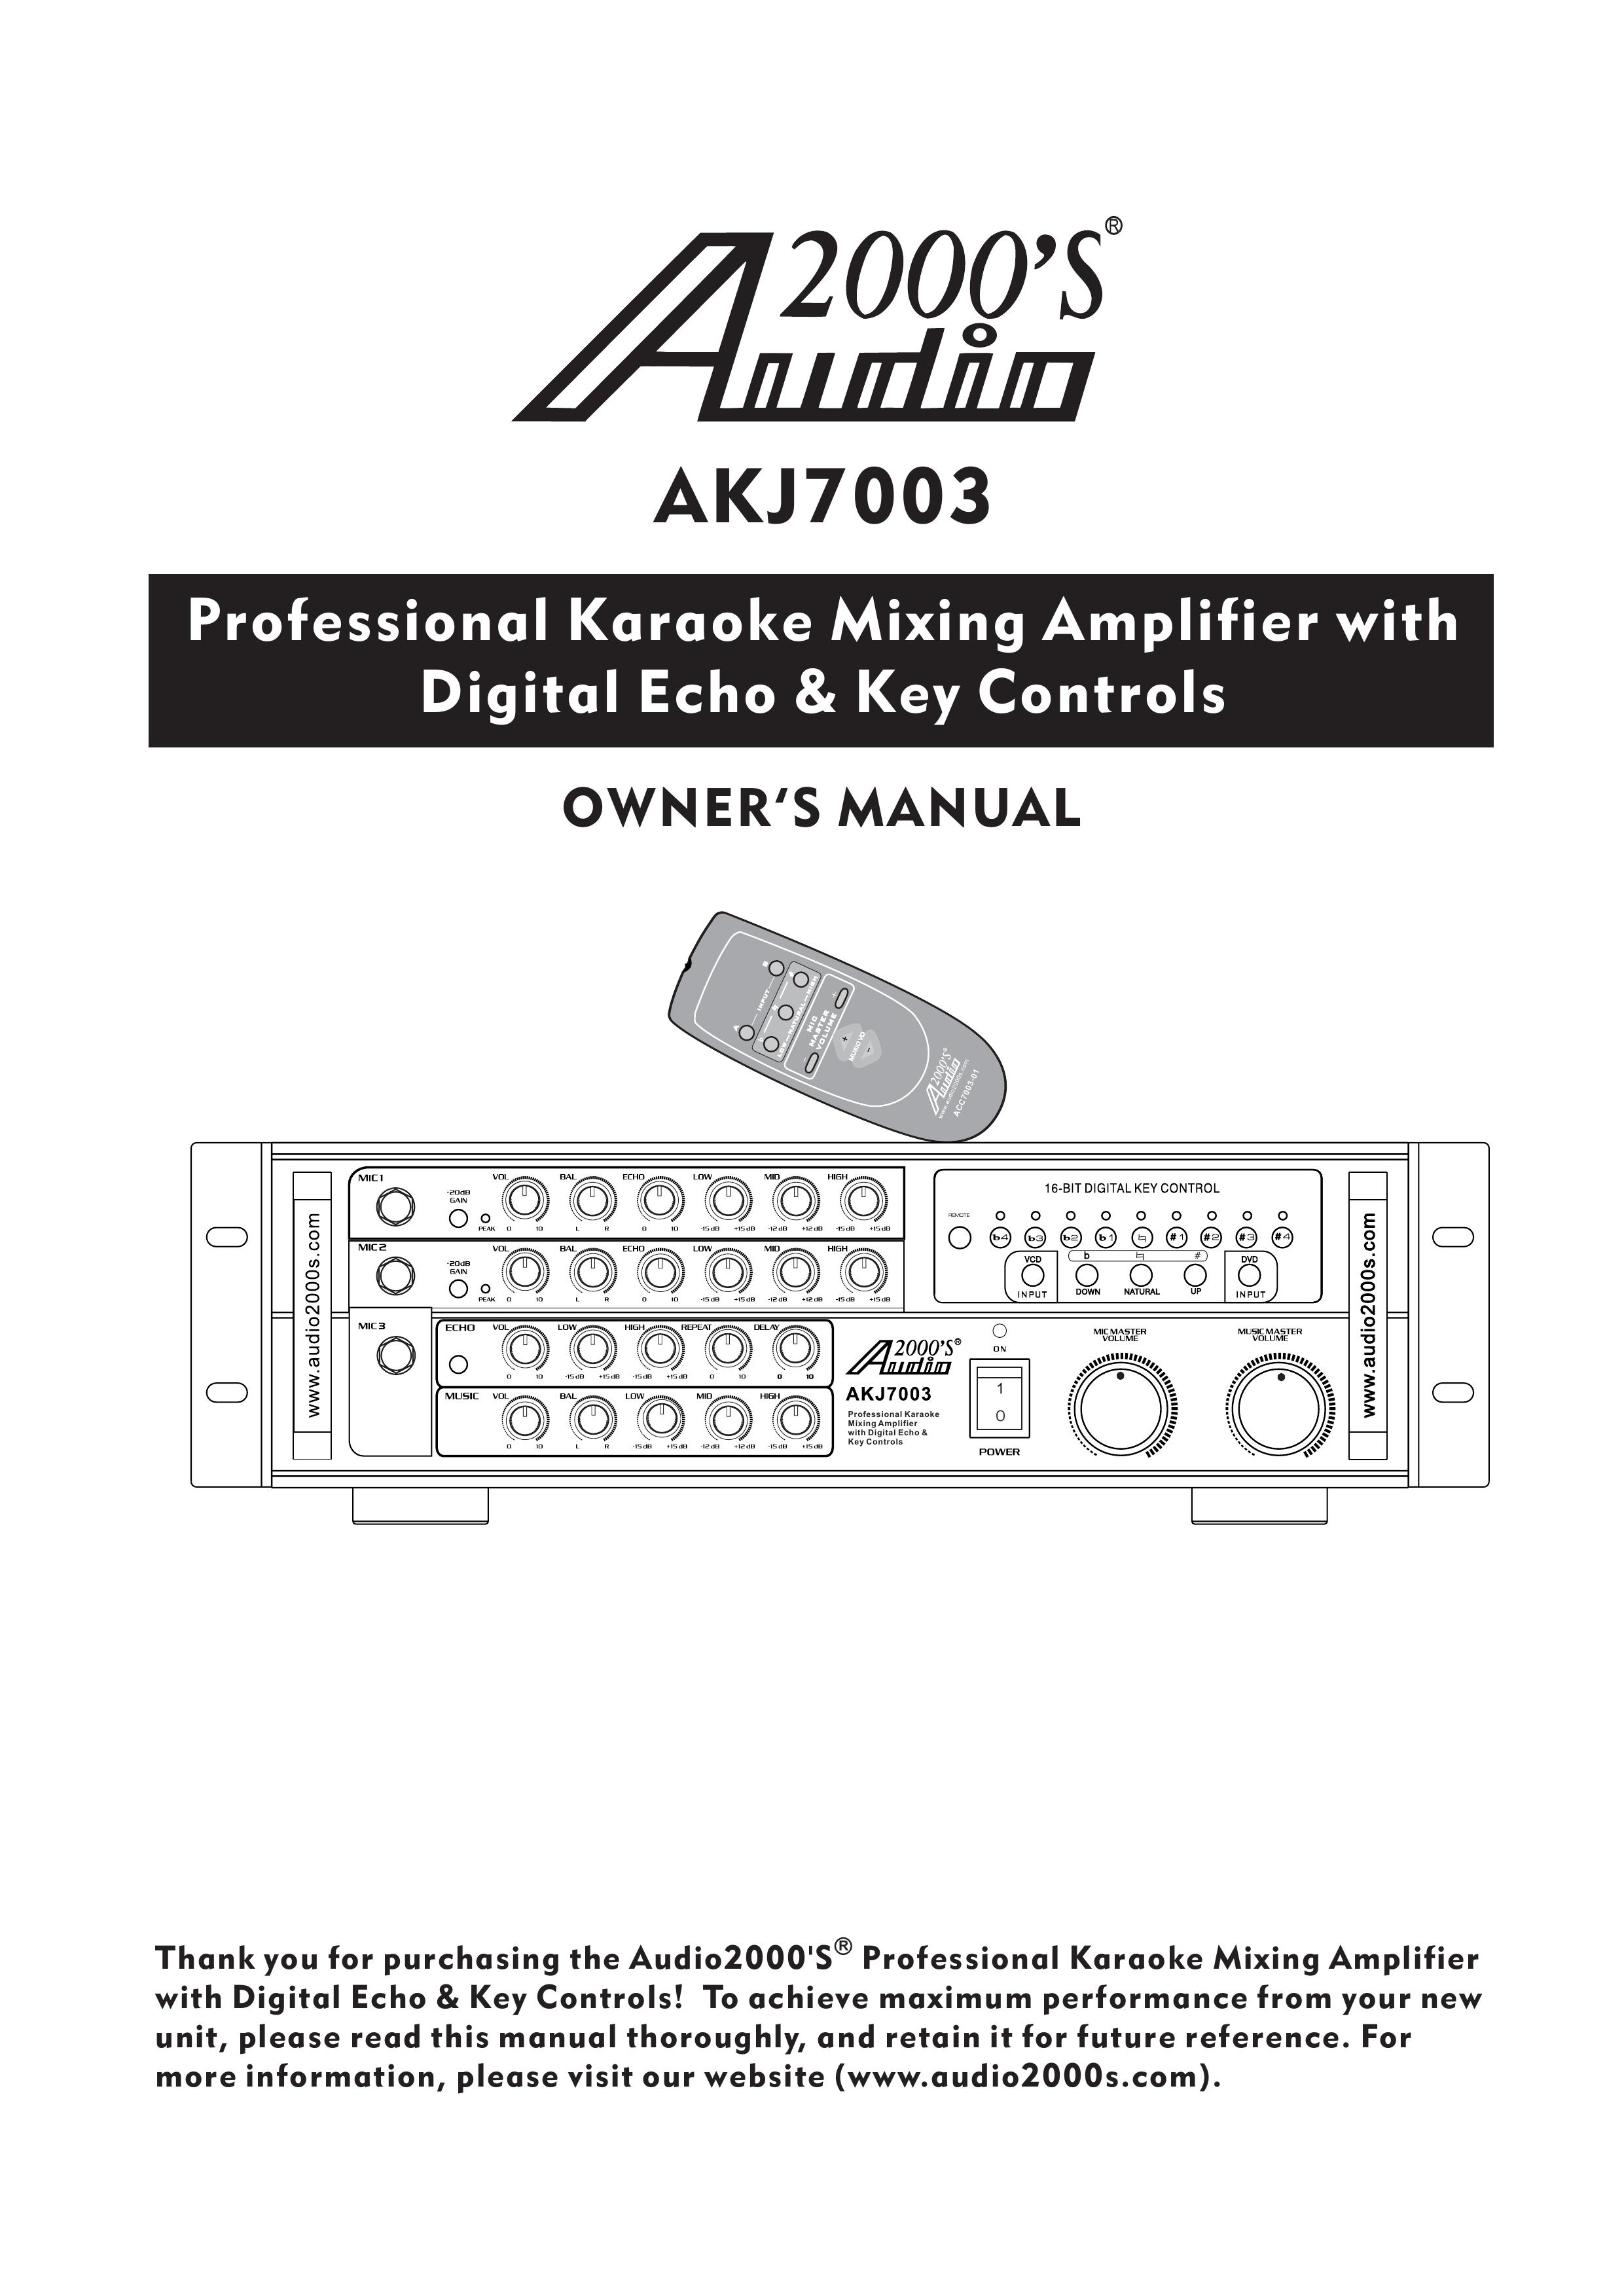 Audio2000's AKJ7003 Karaoke Machine User Manual